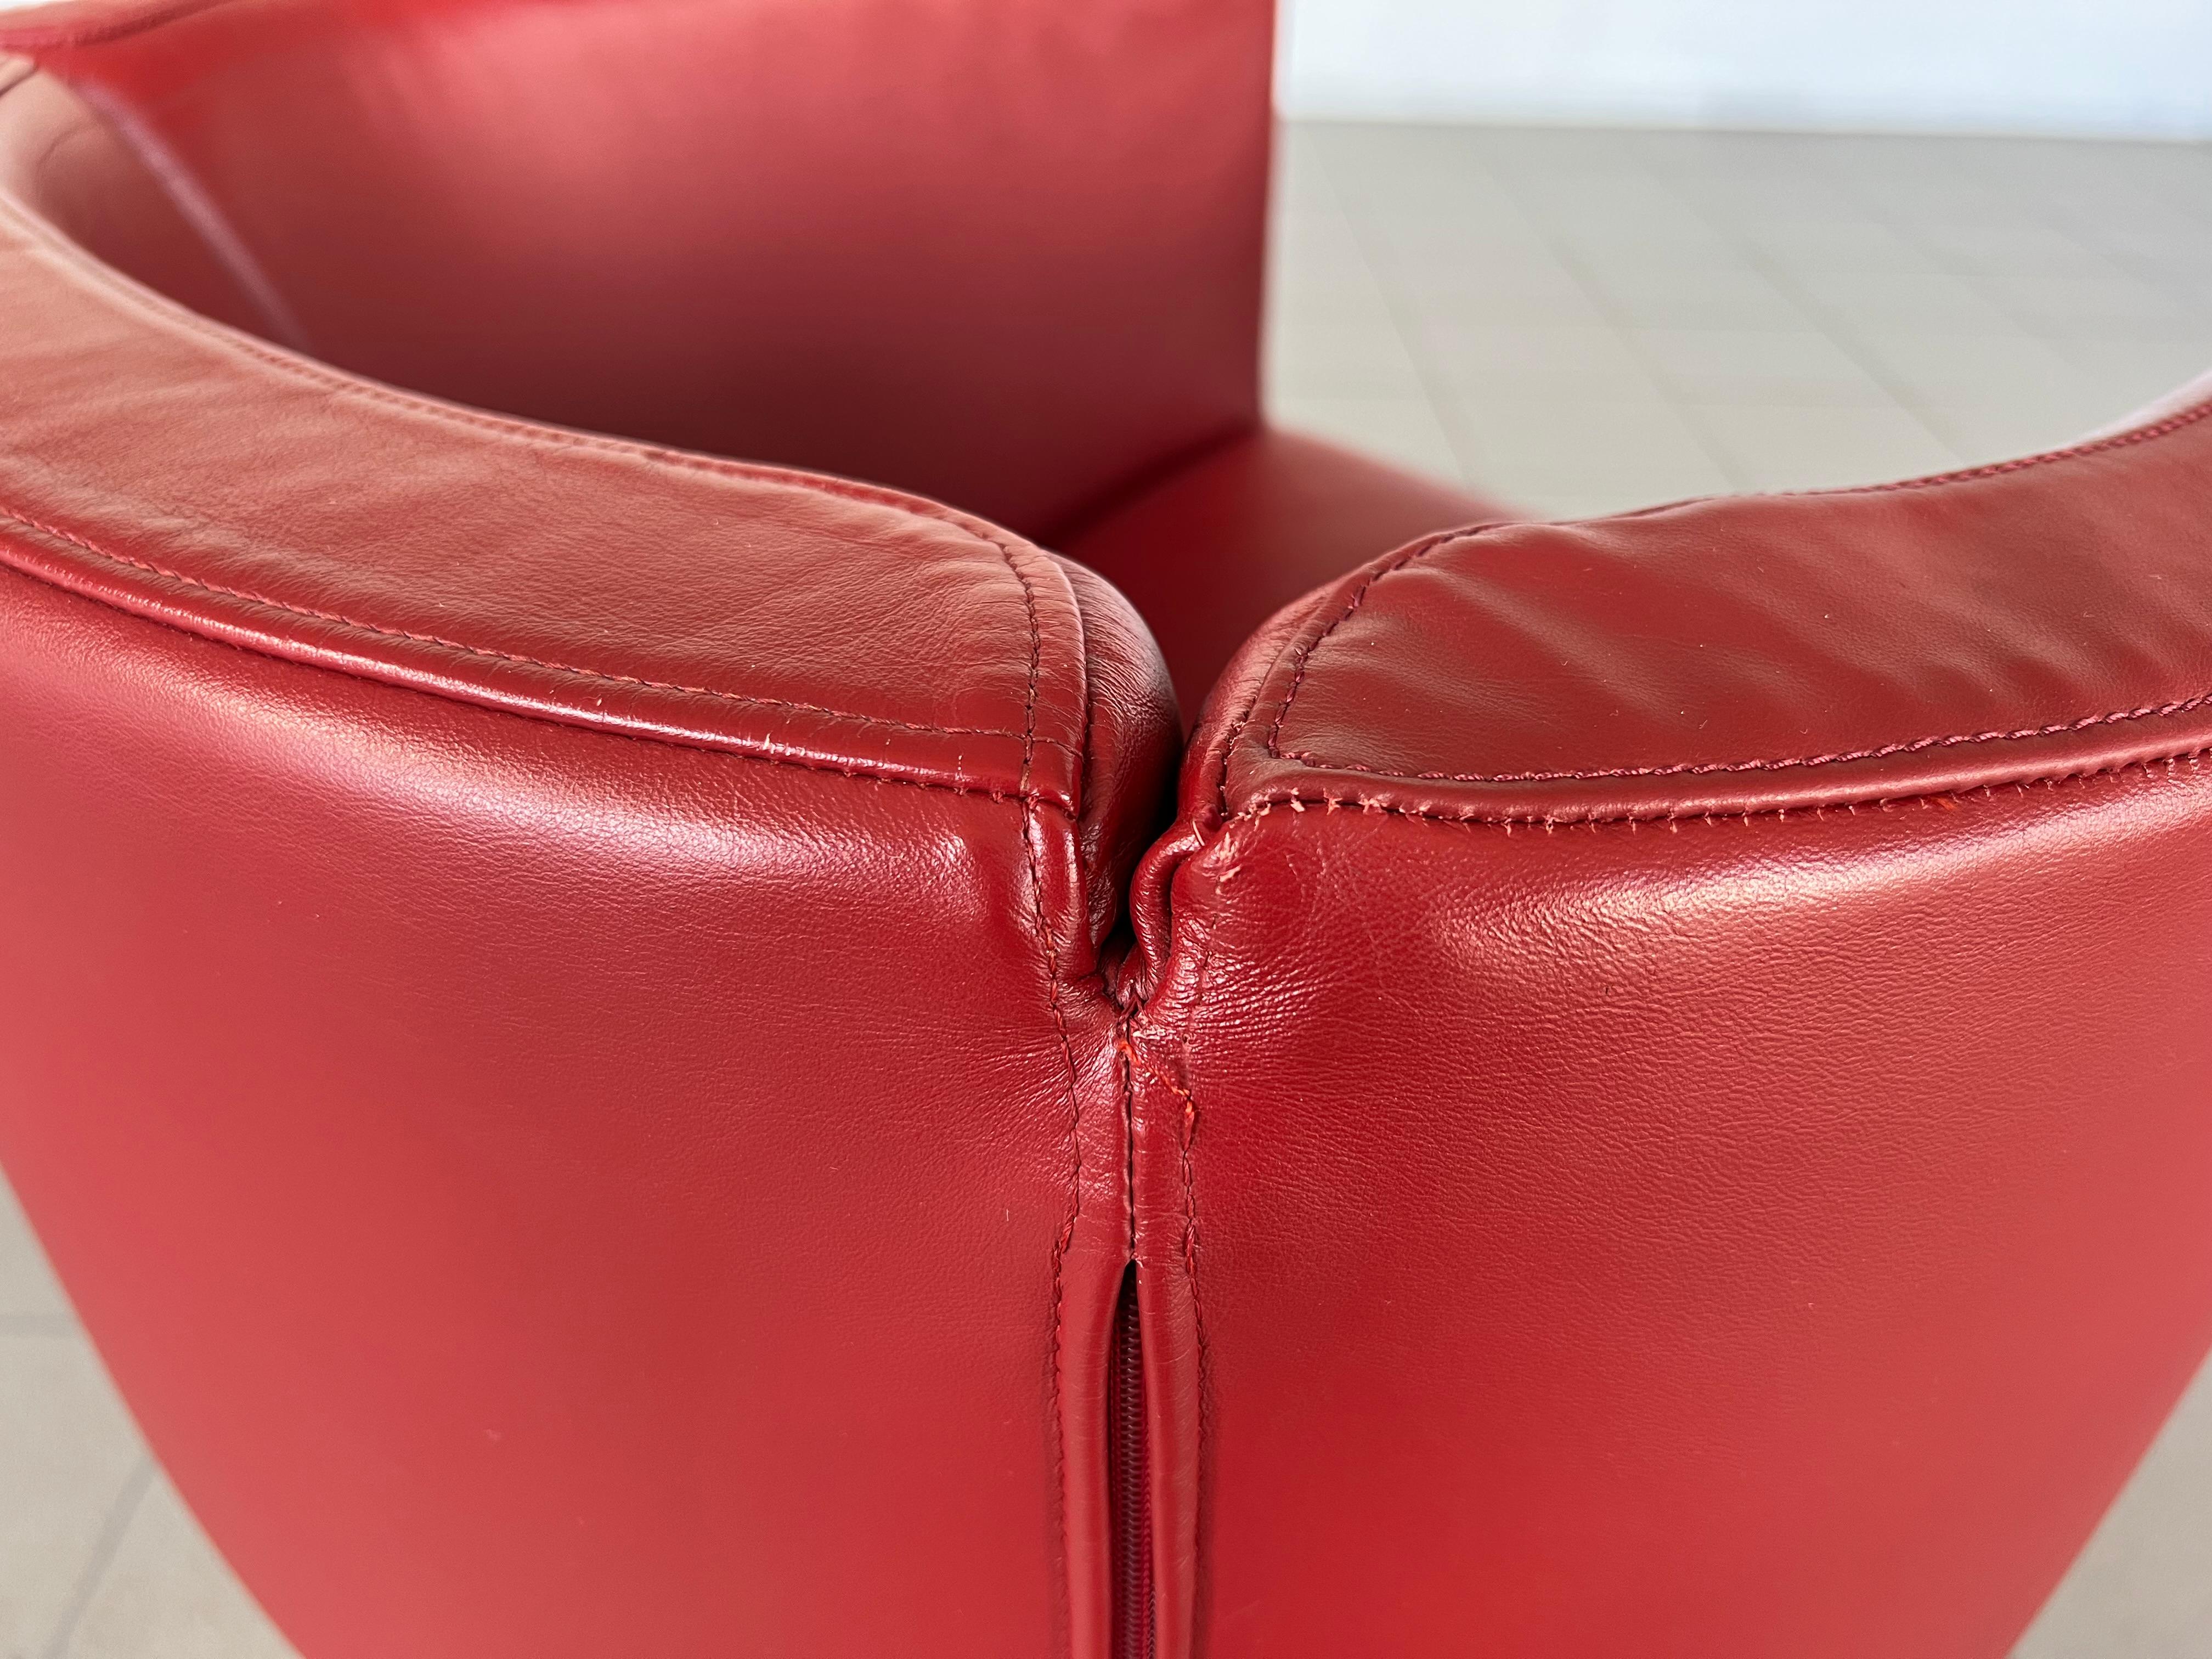 B&B Italia Tulip Model Red Leather Armchairs by Jeffrey Bernett  4